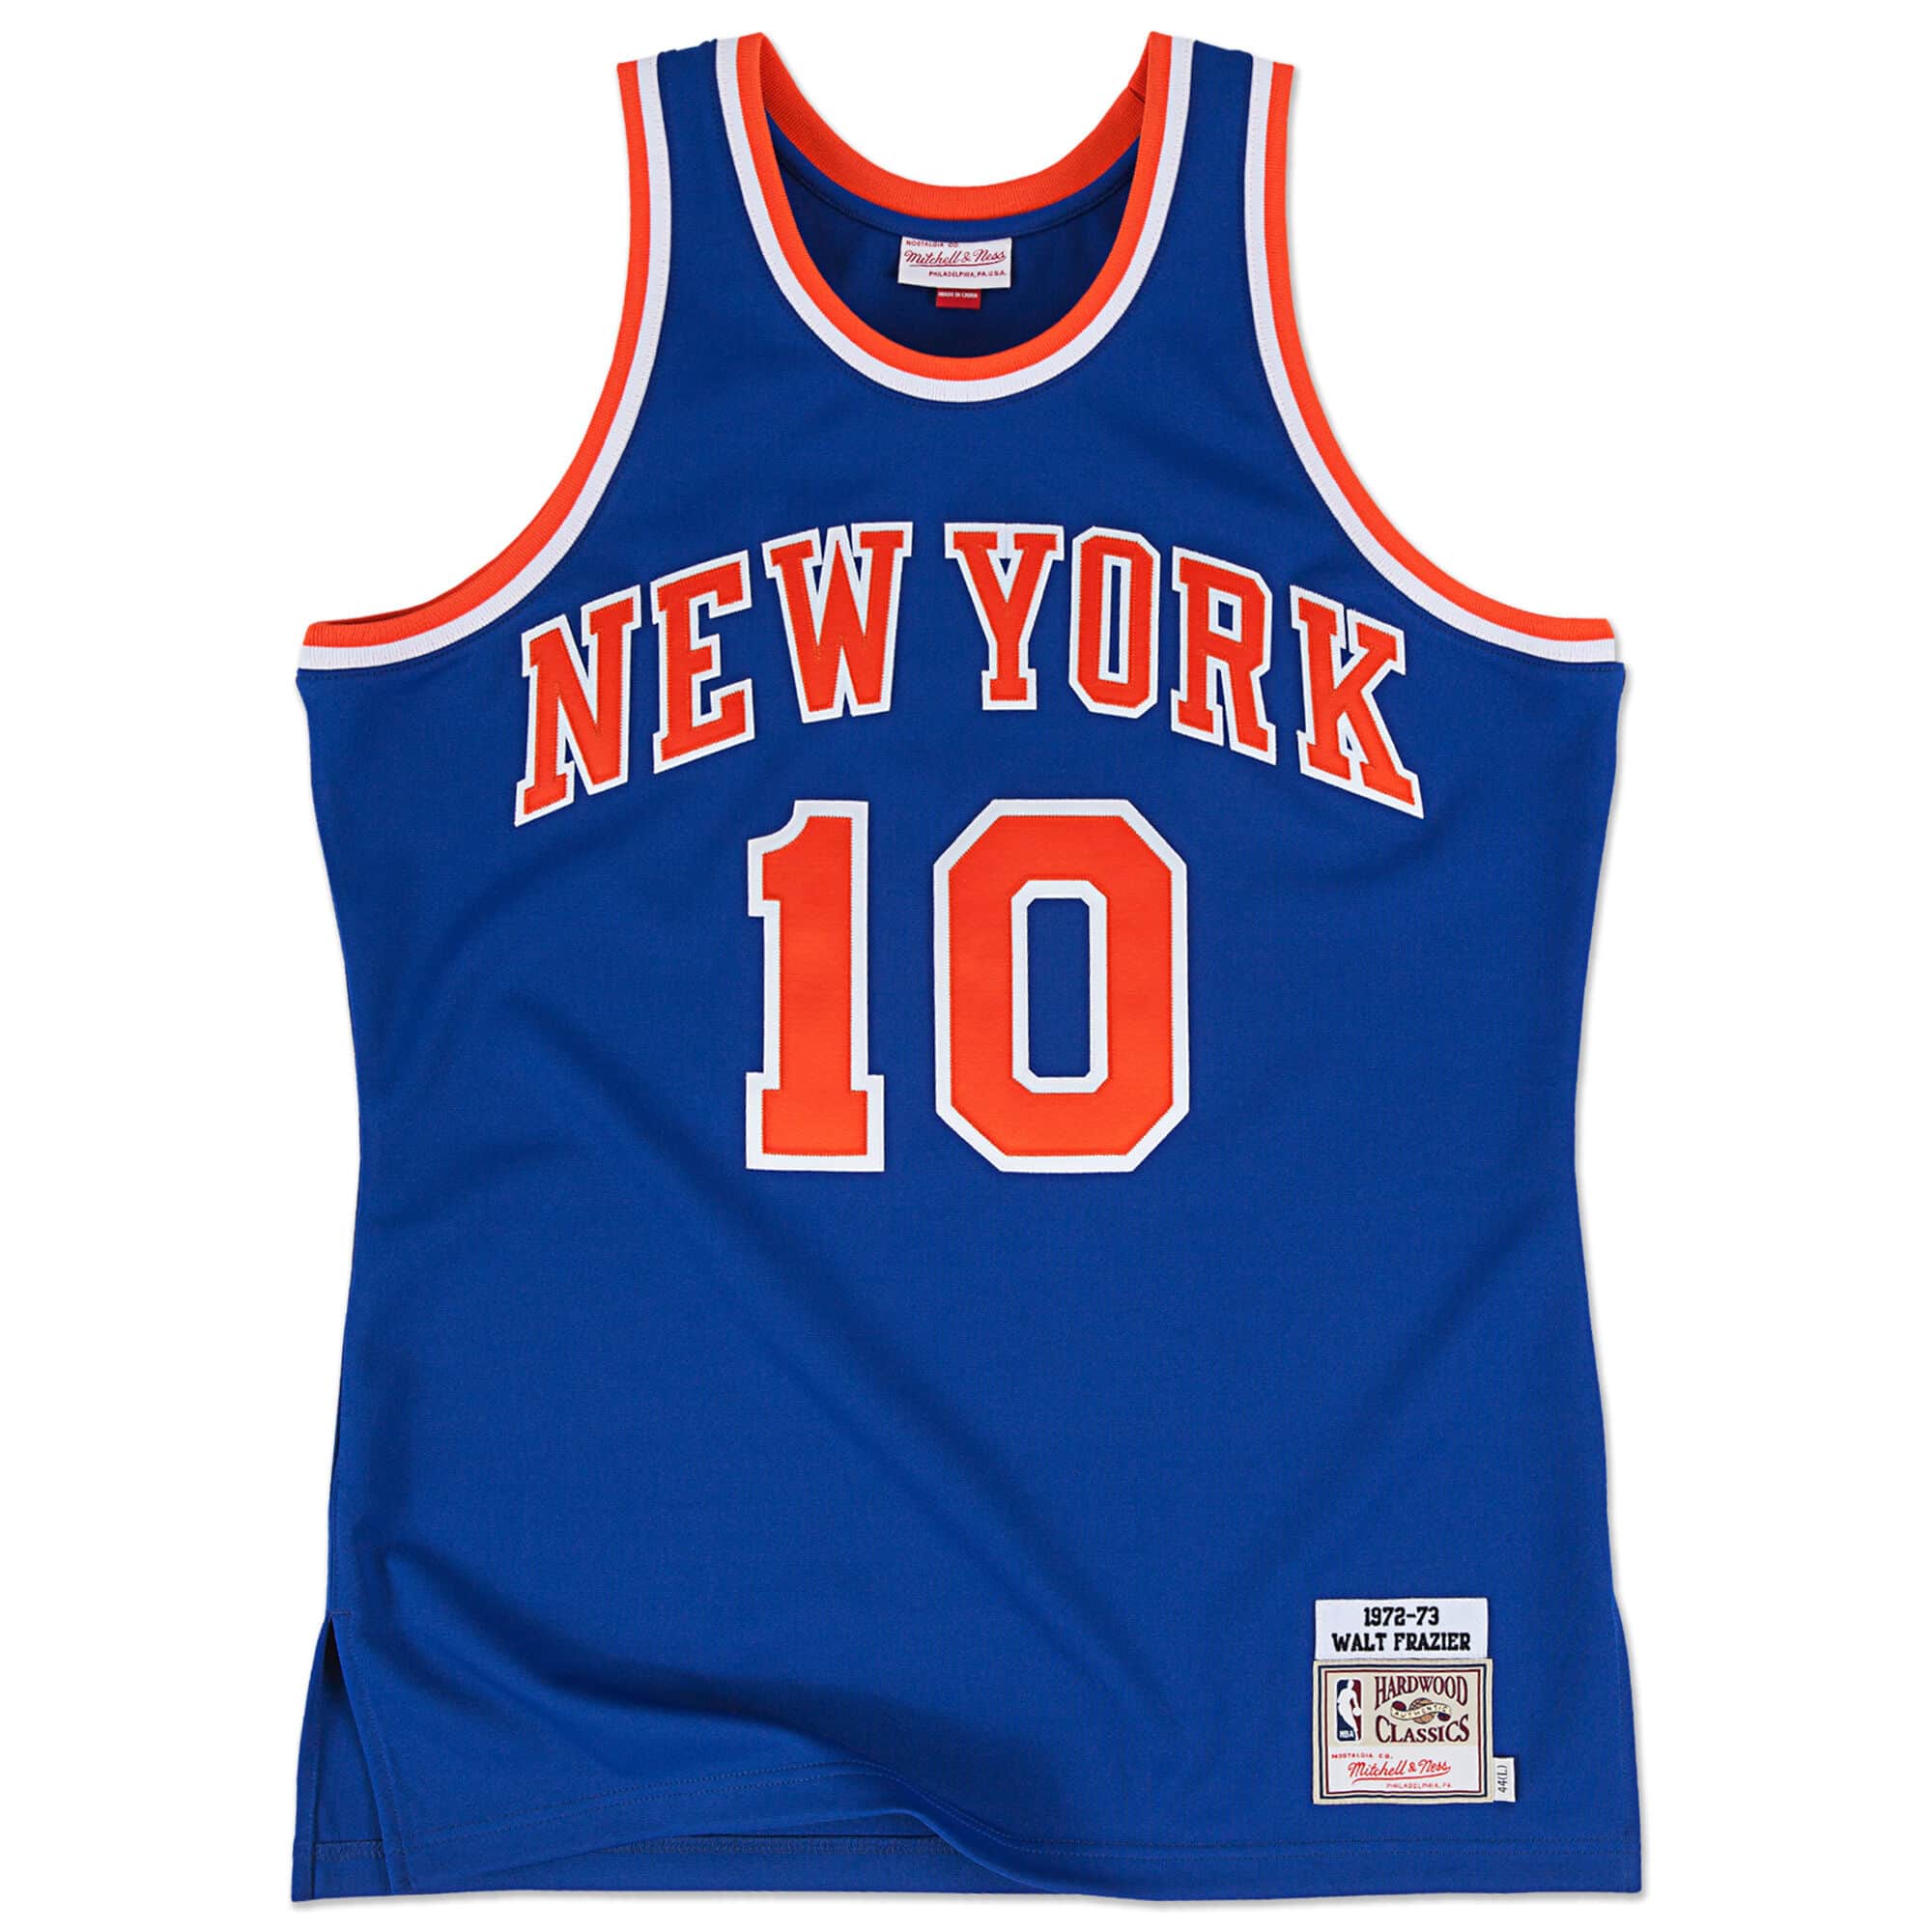 Walt Frazier 1972-73 Jersey New York Knicks